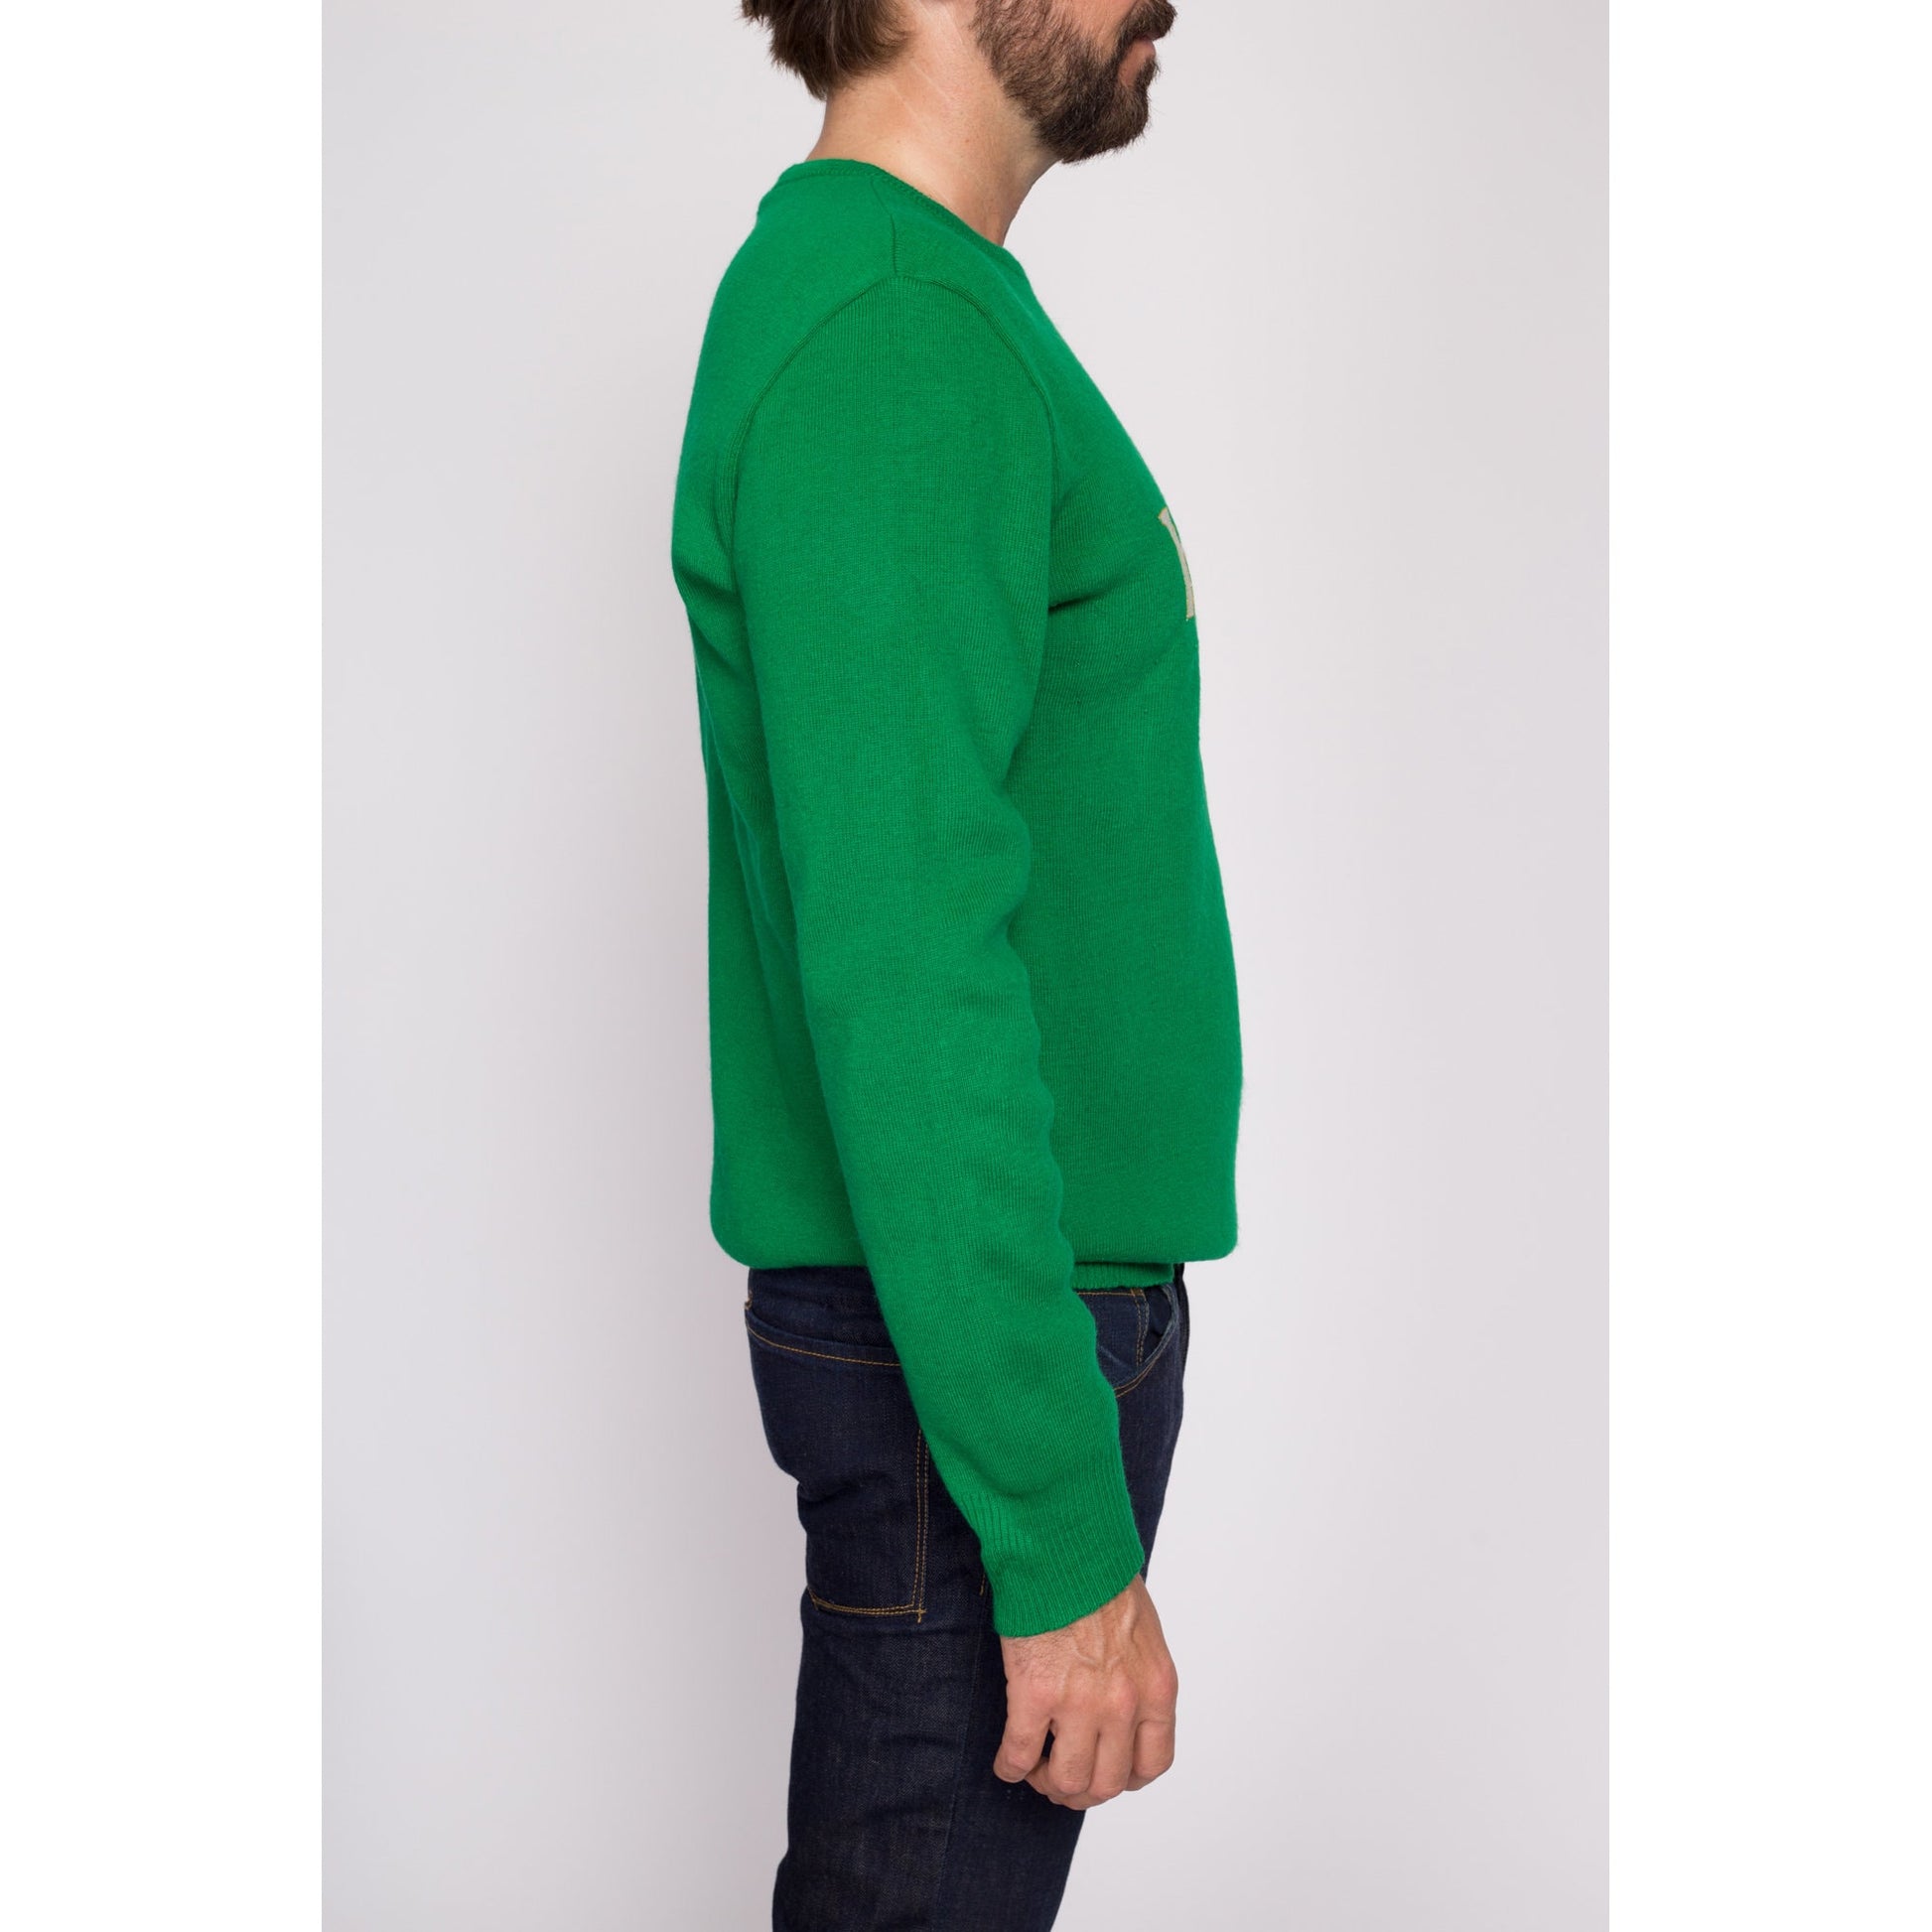 M| 80s Ireland Sweater - Men's Medium | Vintage Irish Green Knit St. Patrick's Day Souvenir Pullover